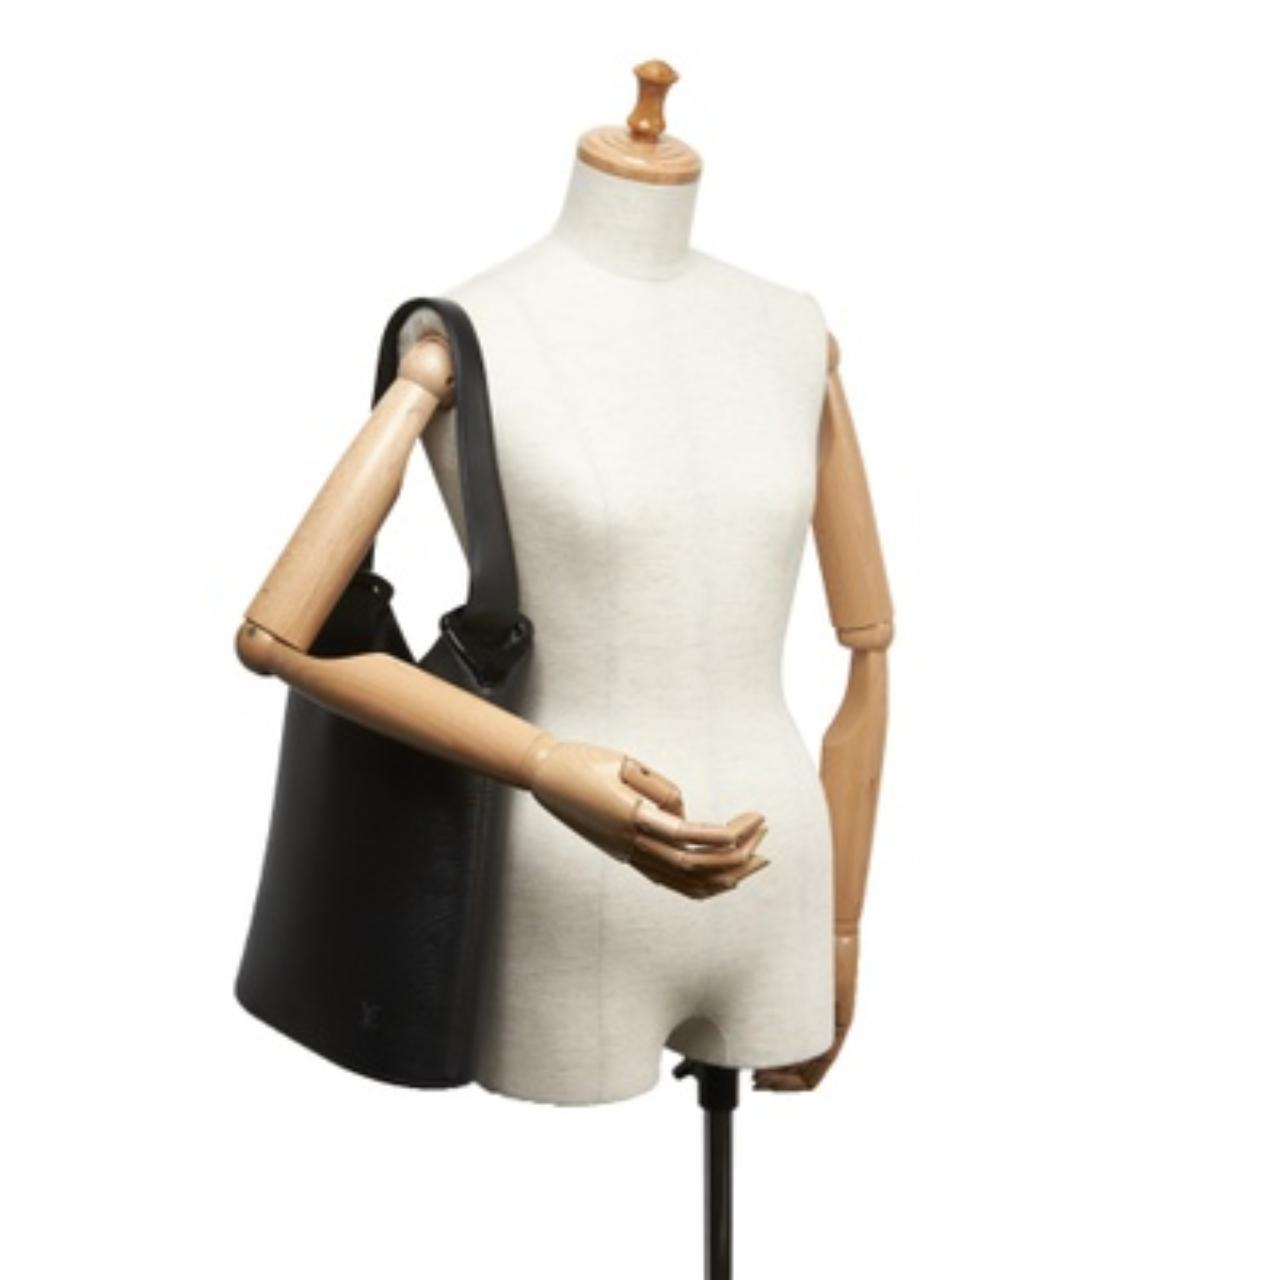 Black Louis Vuitton Epi Sac Verseau Bag Product - Depop